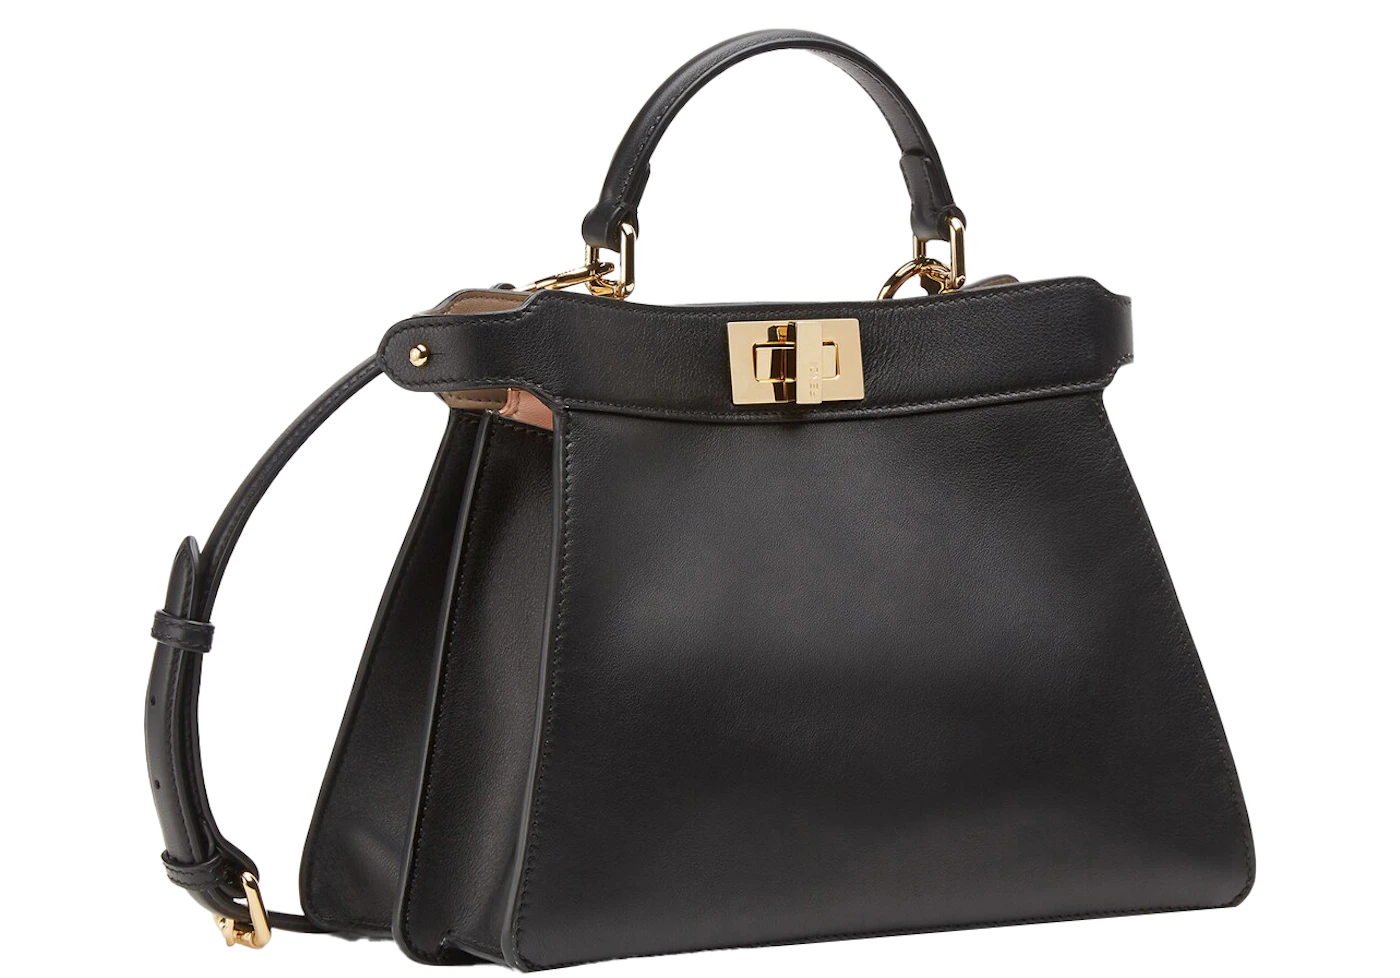 Fendi by Marc Jacobs Peekaboo Iseeu Small Black Leather Bag in Leather ...